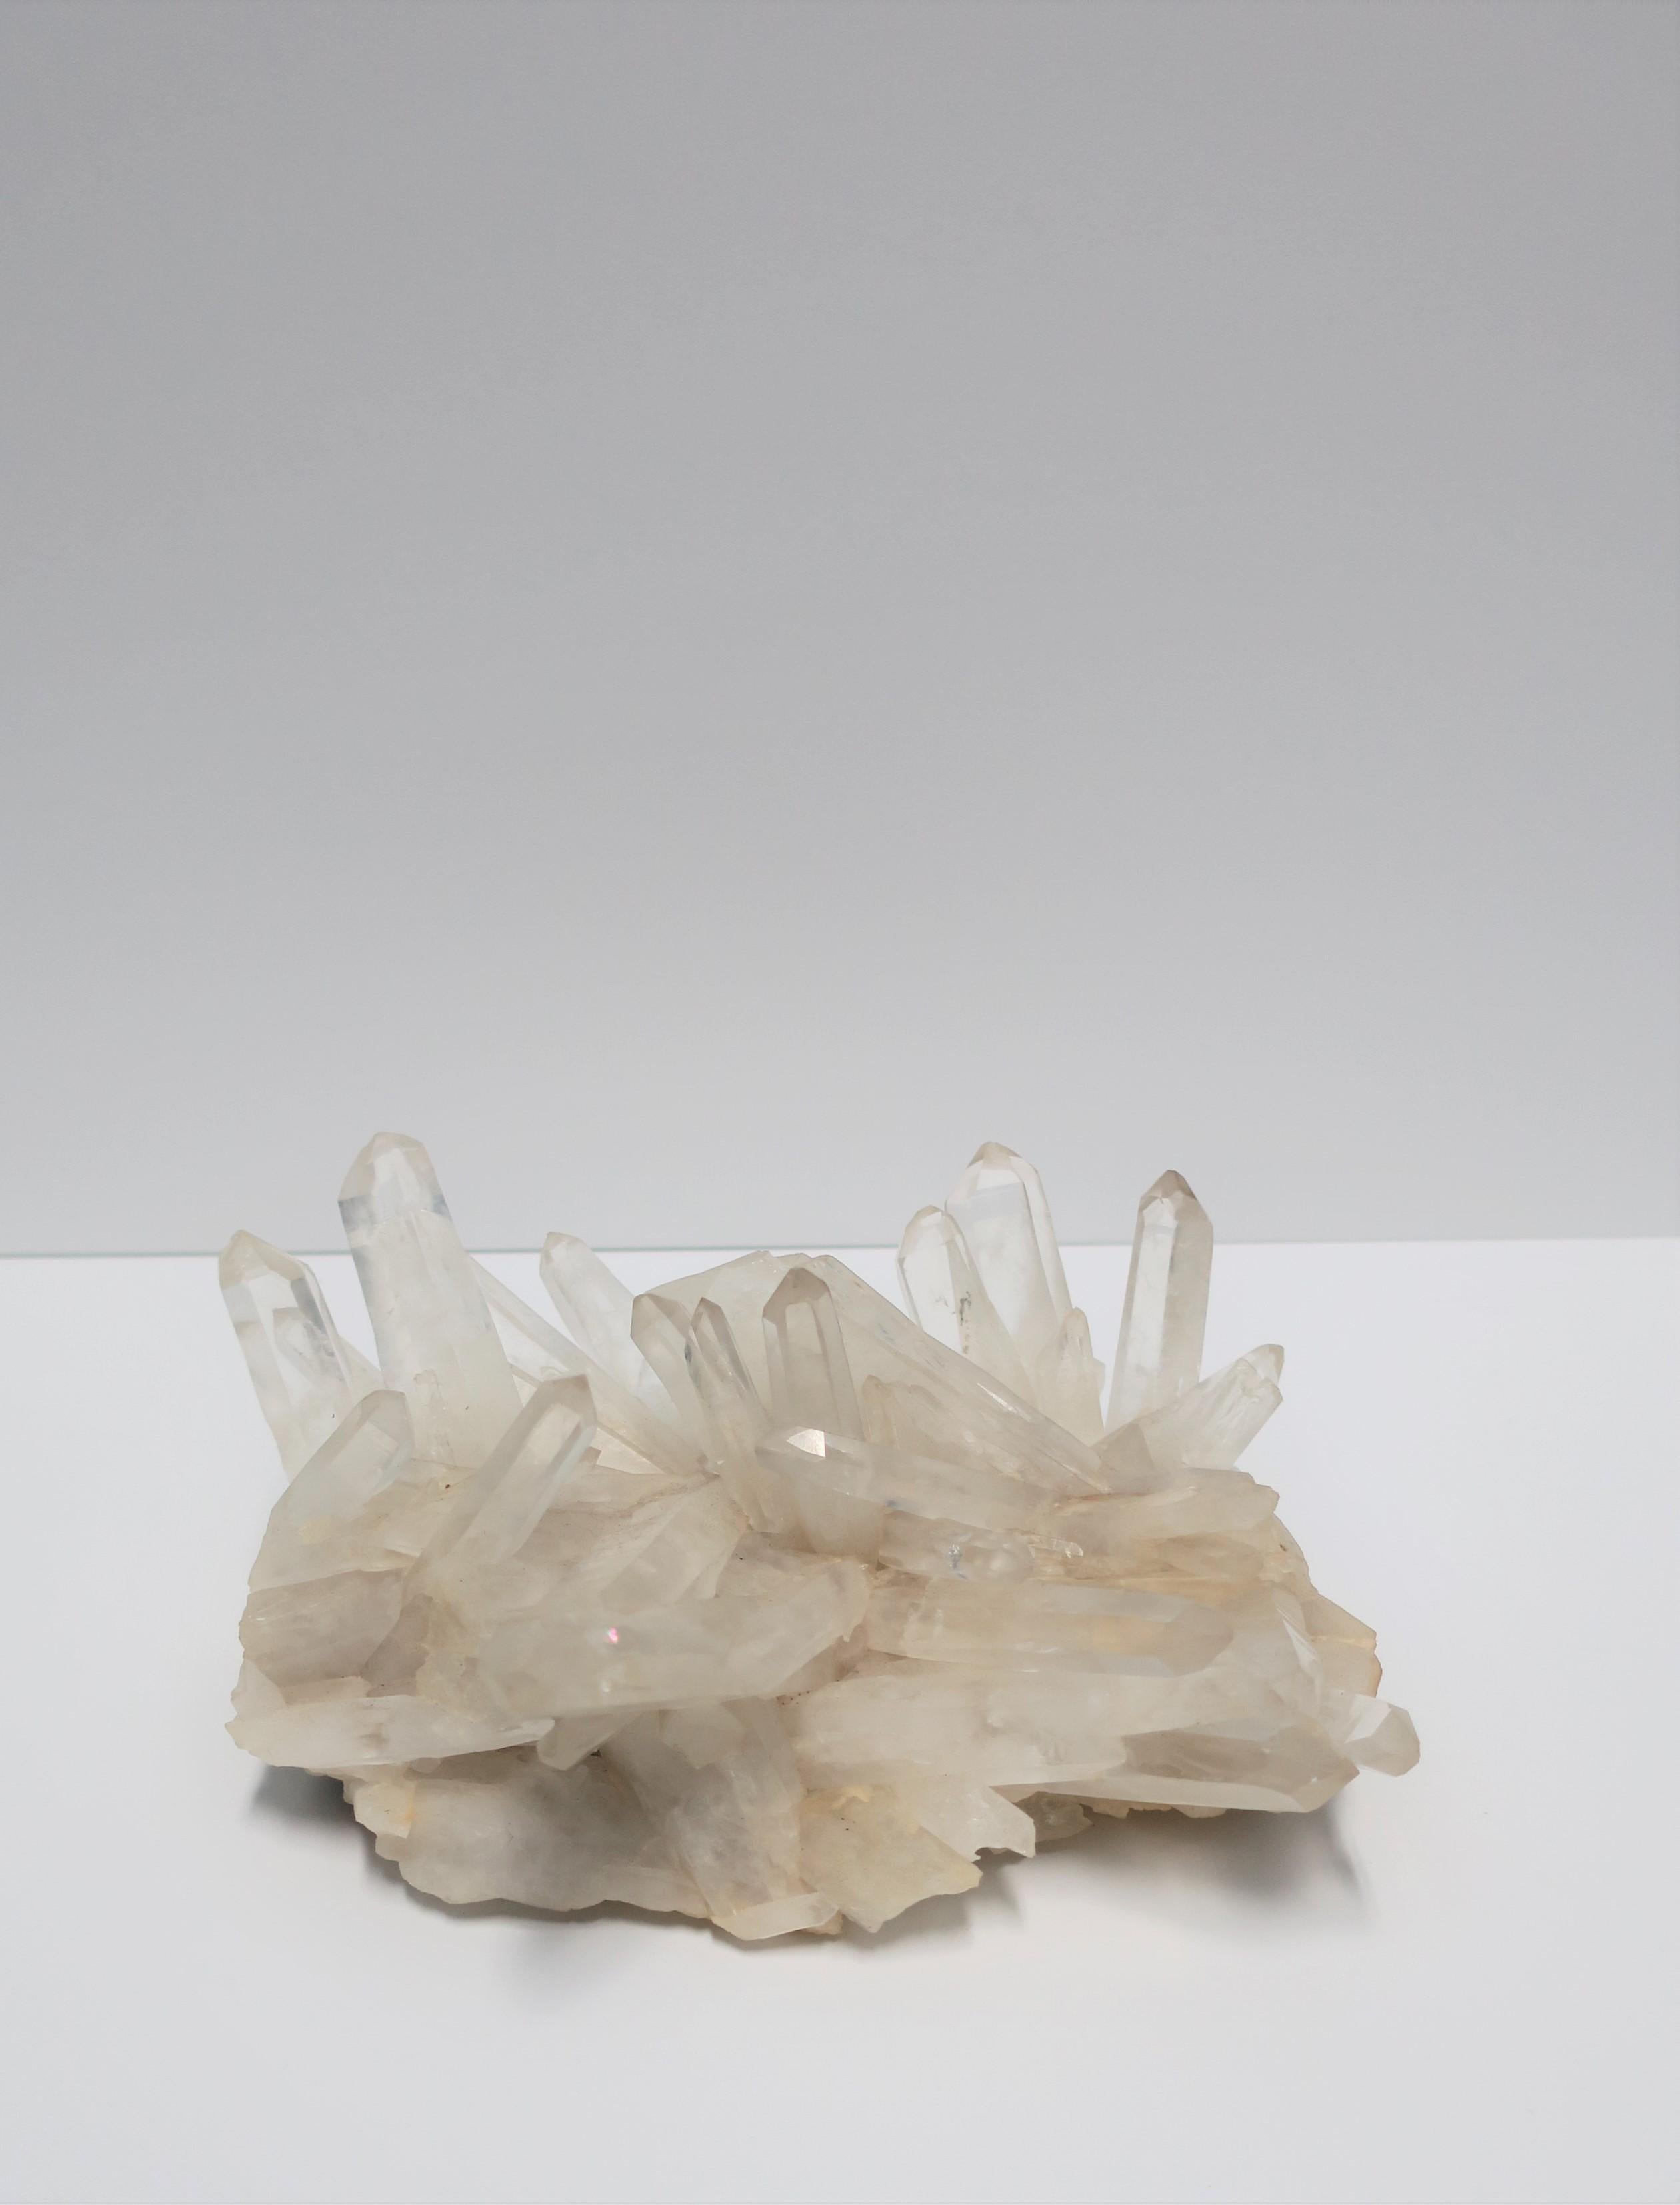 Organic Modern Natural Rock Crystal Piece